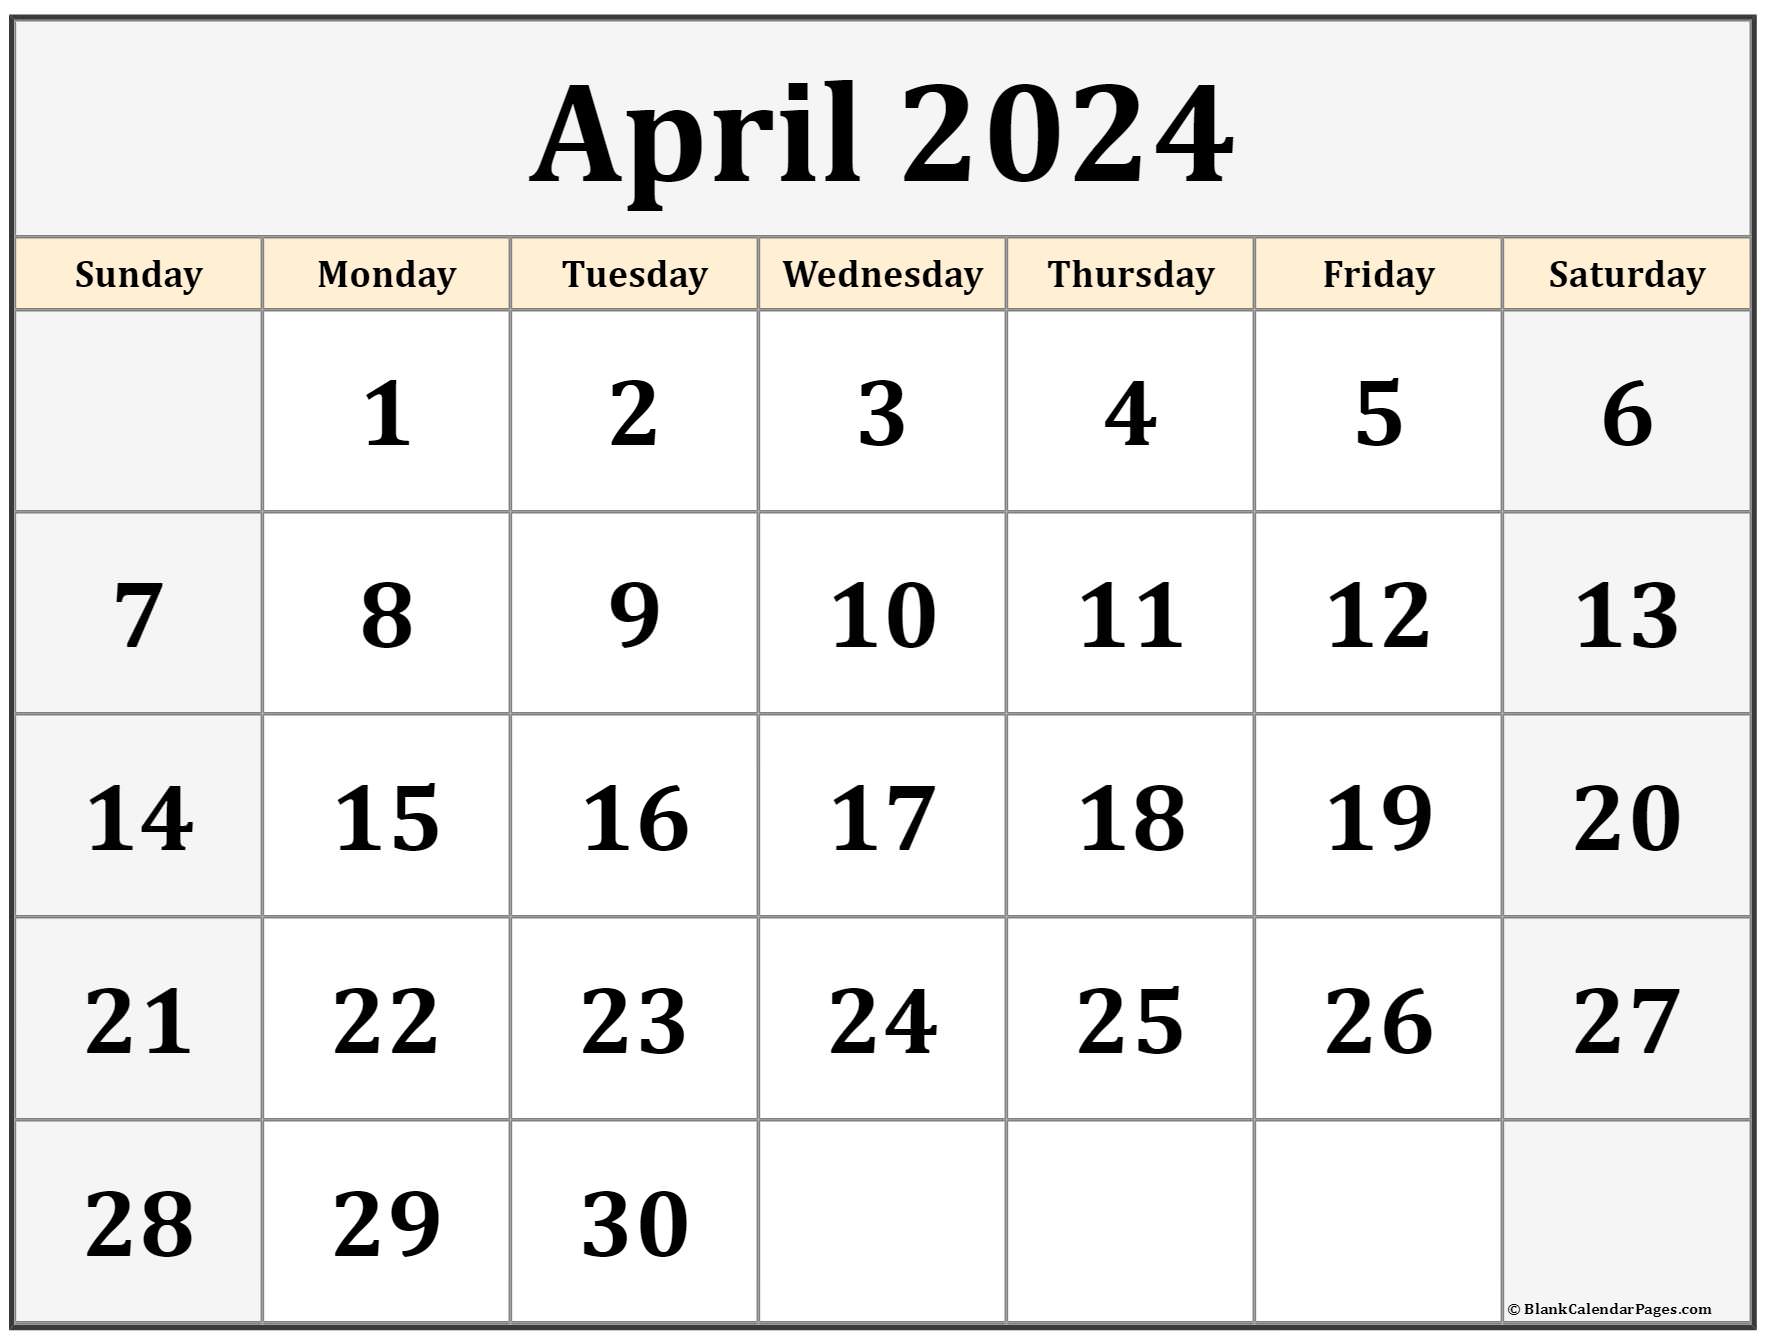 Apr 2023 Calendar Printable Free